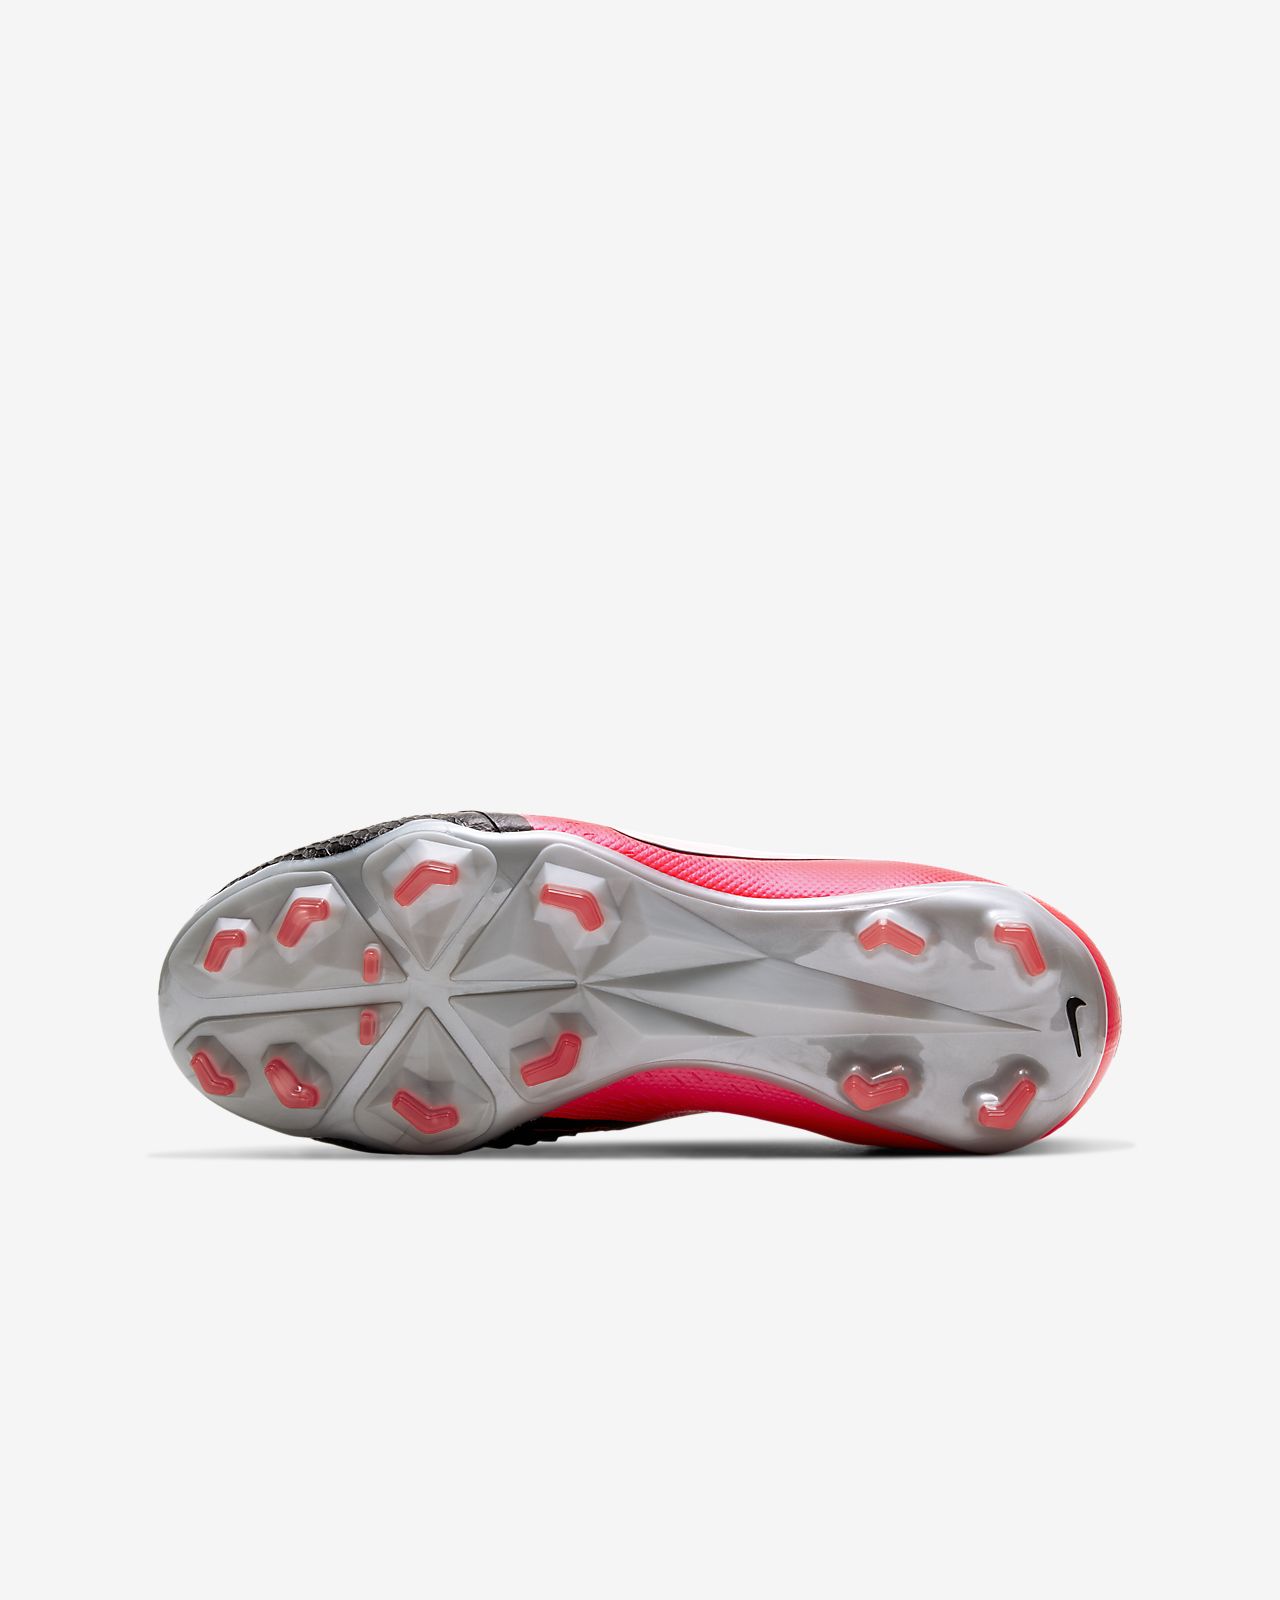 Nike Hypervenom Phelon IC zaalvoetbalschoenen Schoenen